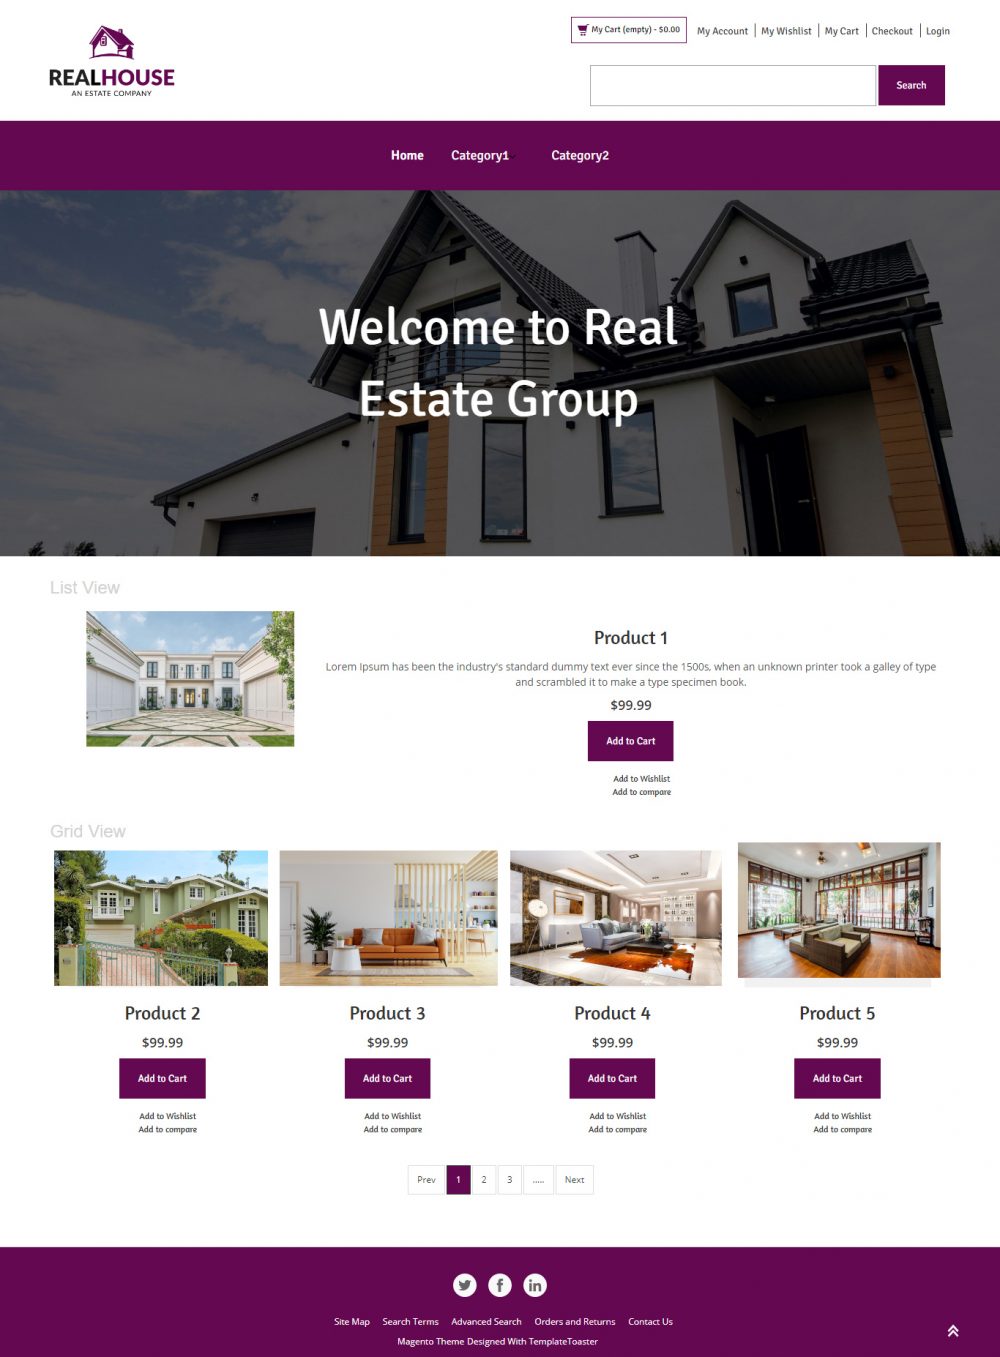 Real House - A Real Estate Company Magento Theme